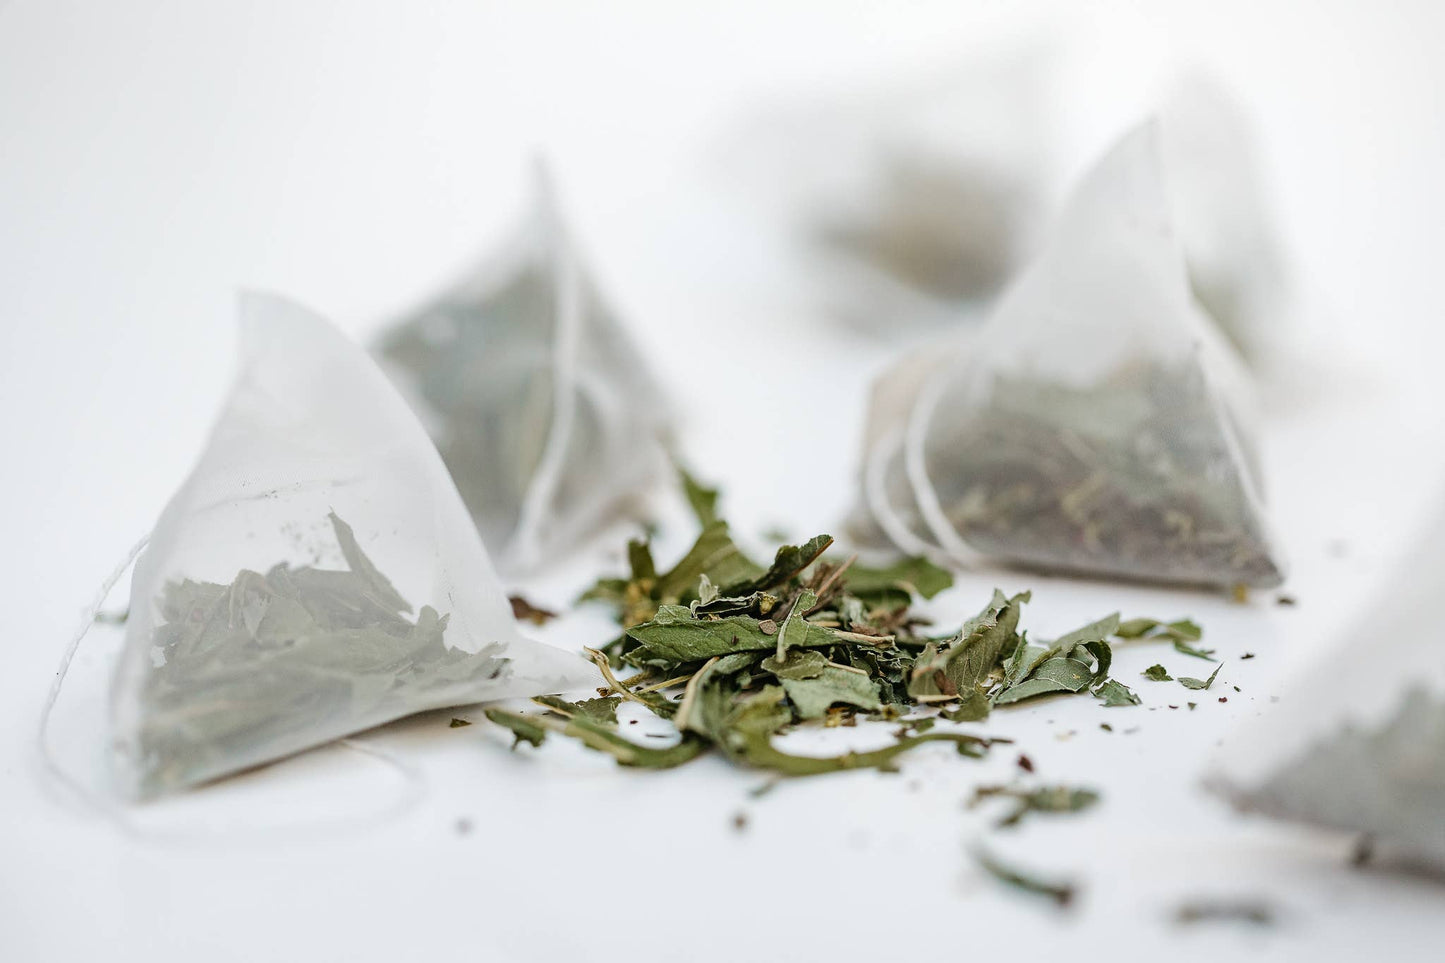 Nordic Green Tea - healthy,theine free, morning herbal tea: 25 biodegradable tea bags